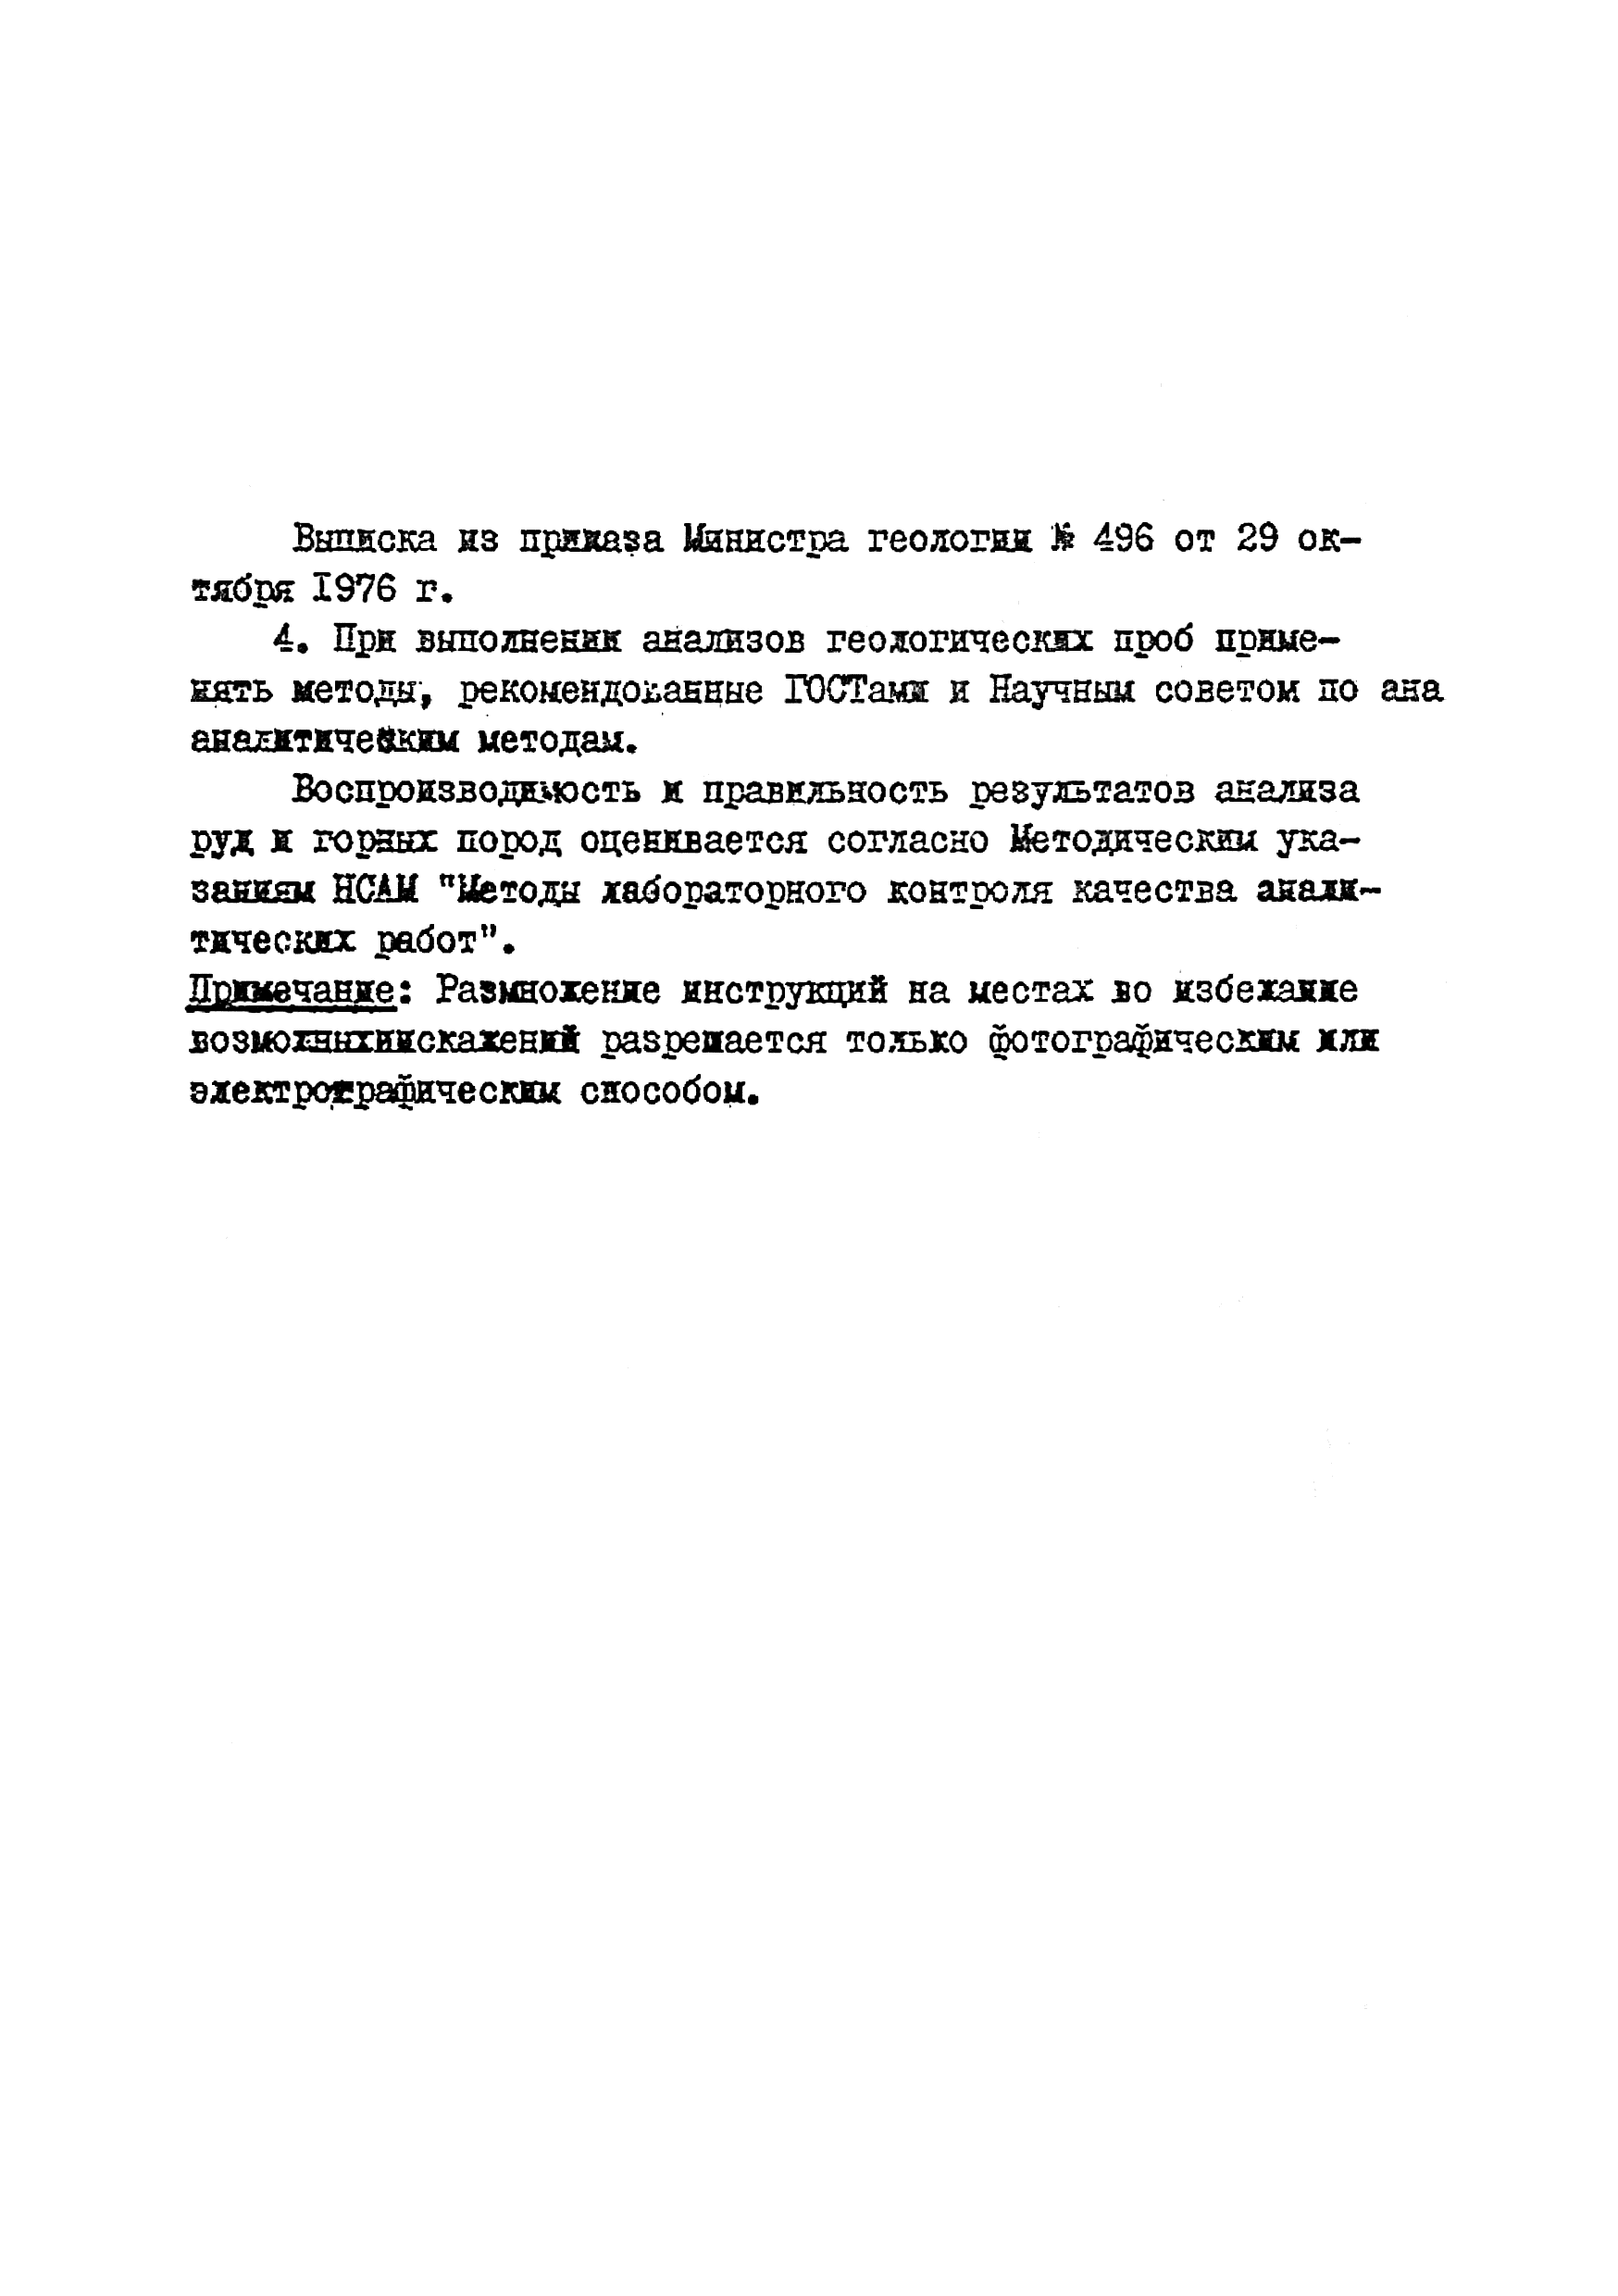 Инструкция НСАМ 195-Х